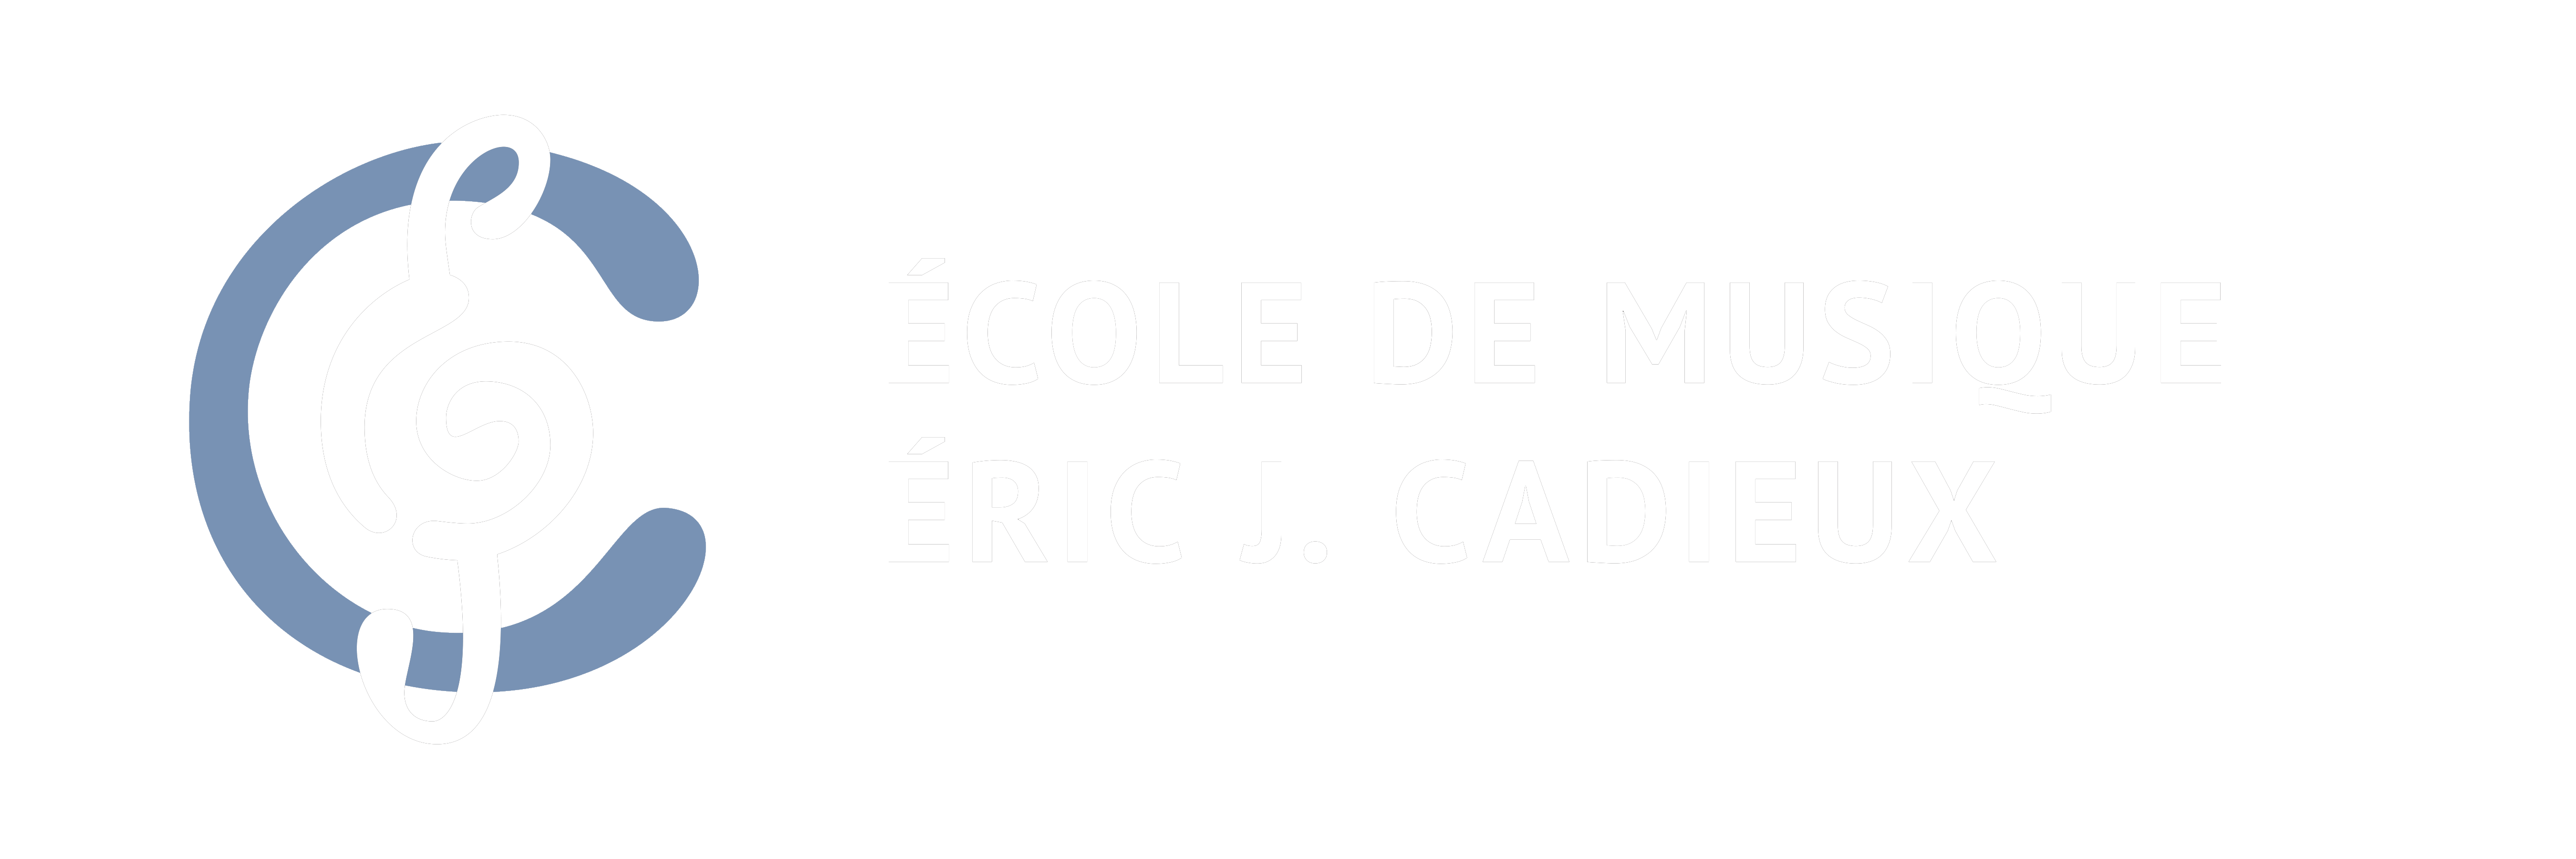 EJC_Logo_titre copy-3